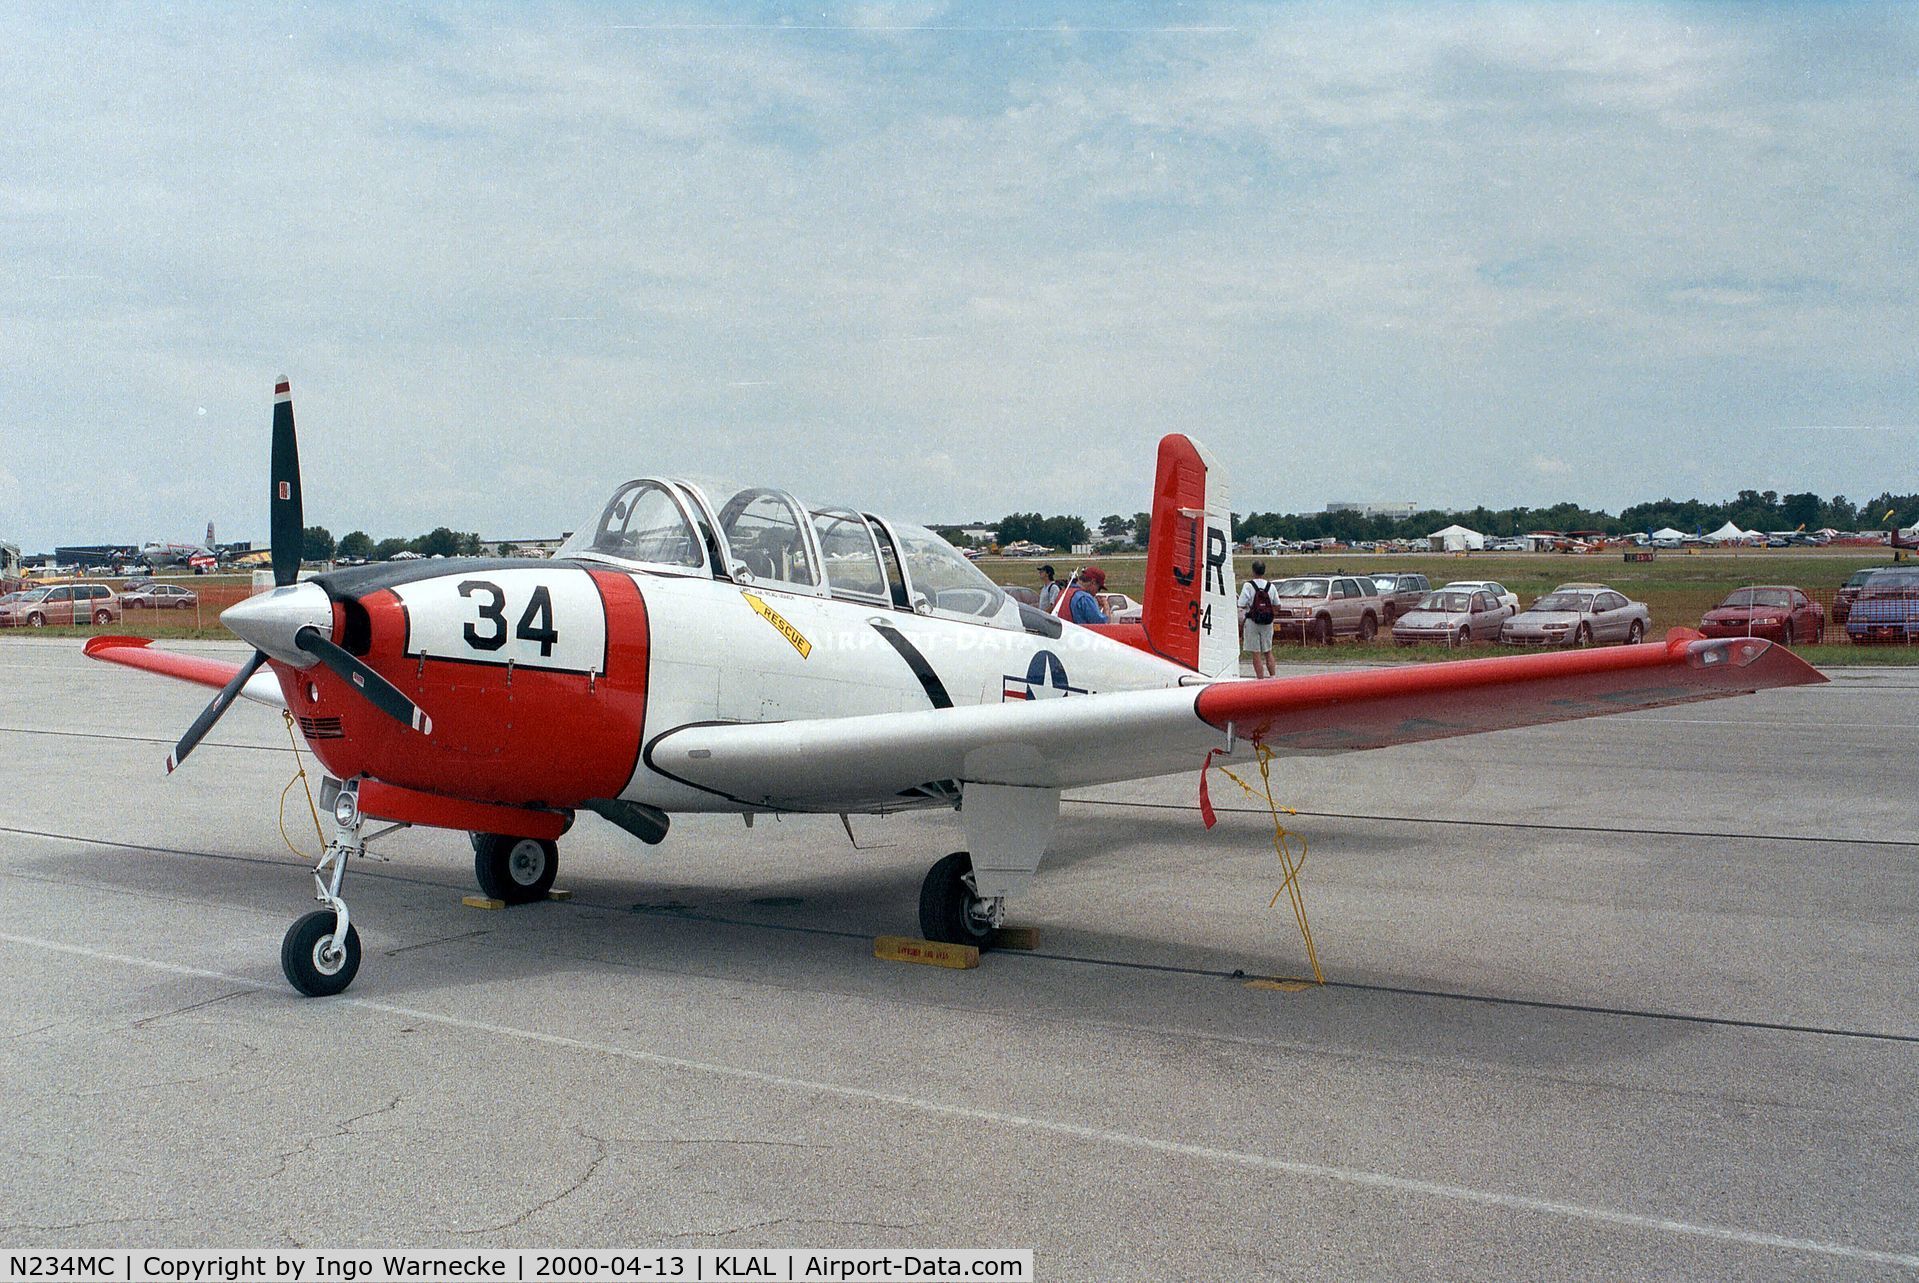 N234MC, 1956 Beech D-45 Mentor C/N BG-411, Beechcraft D-45 (T-34 Mentor) at 2000 Sun 'n Fun, Lakeland FL